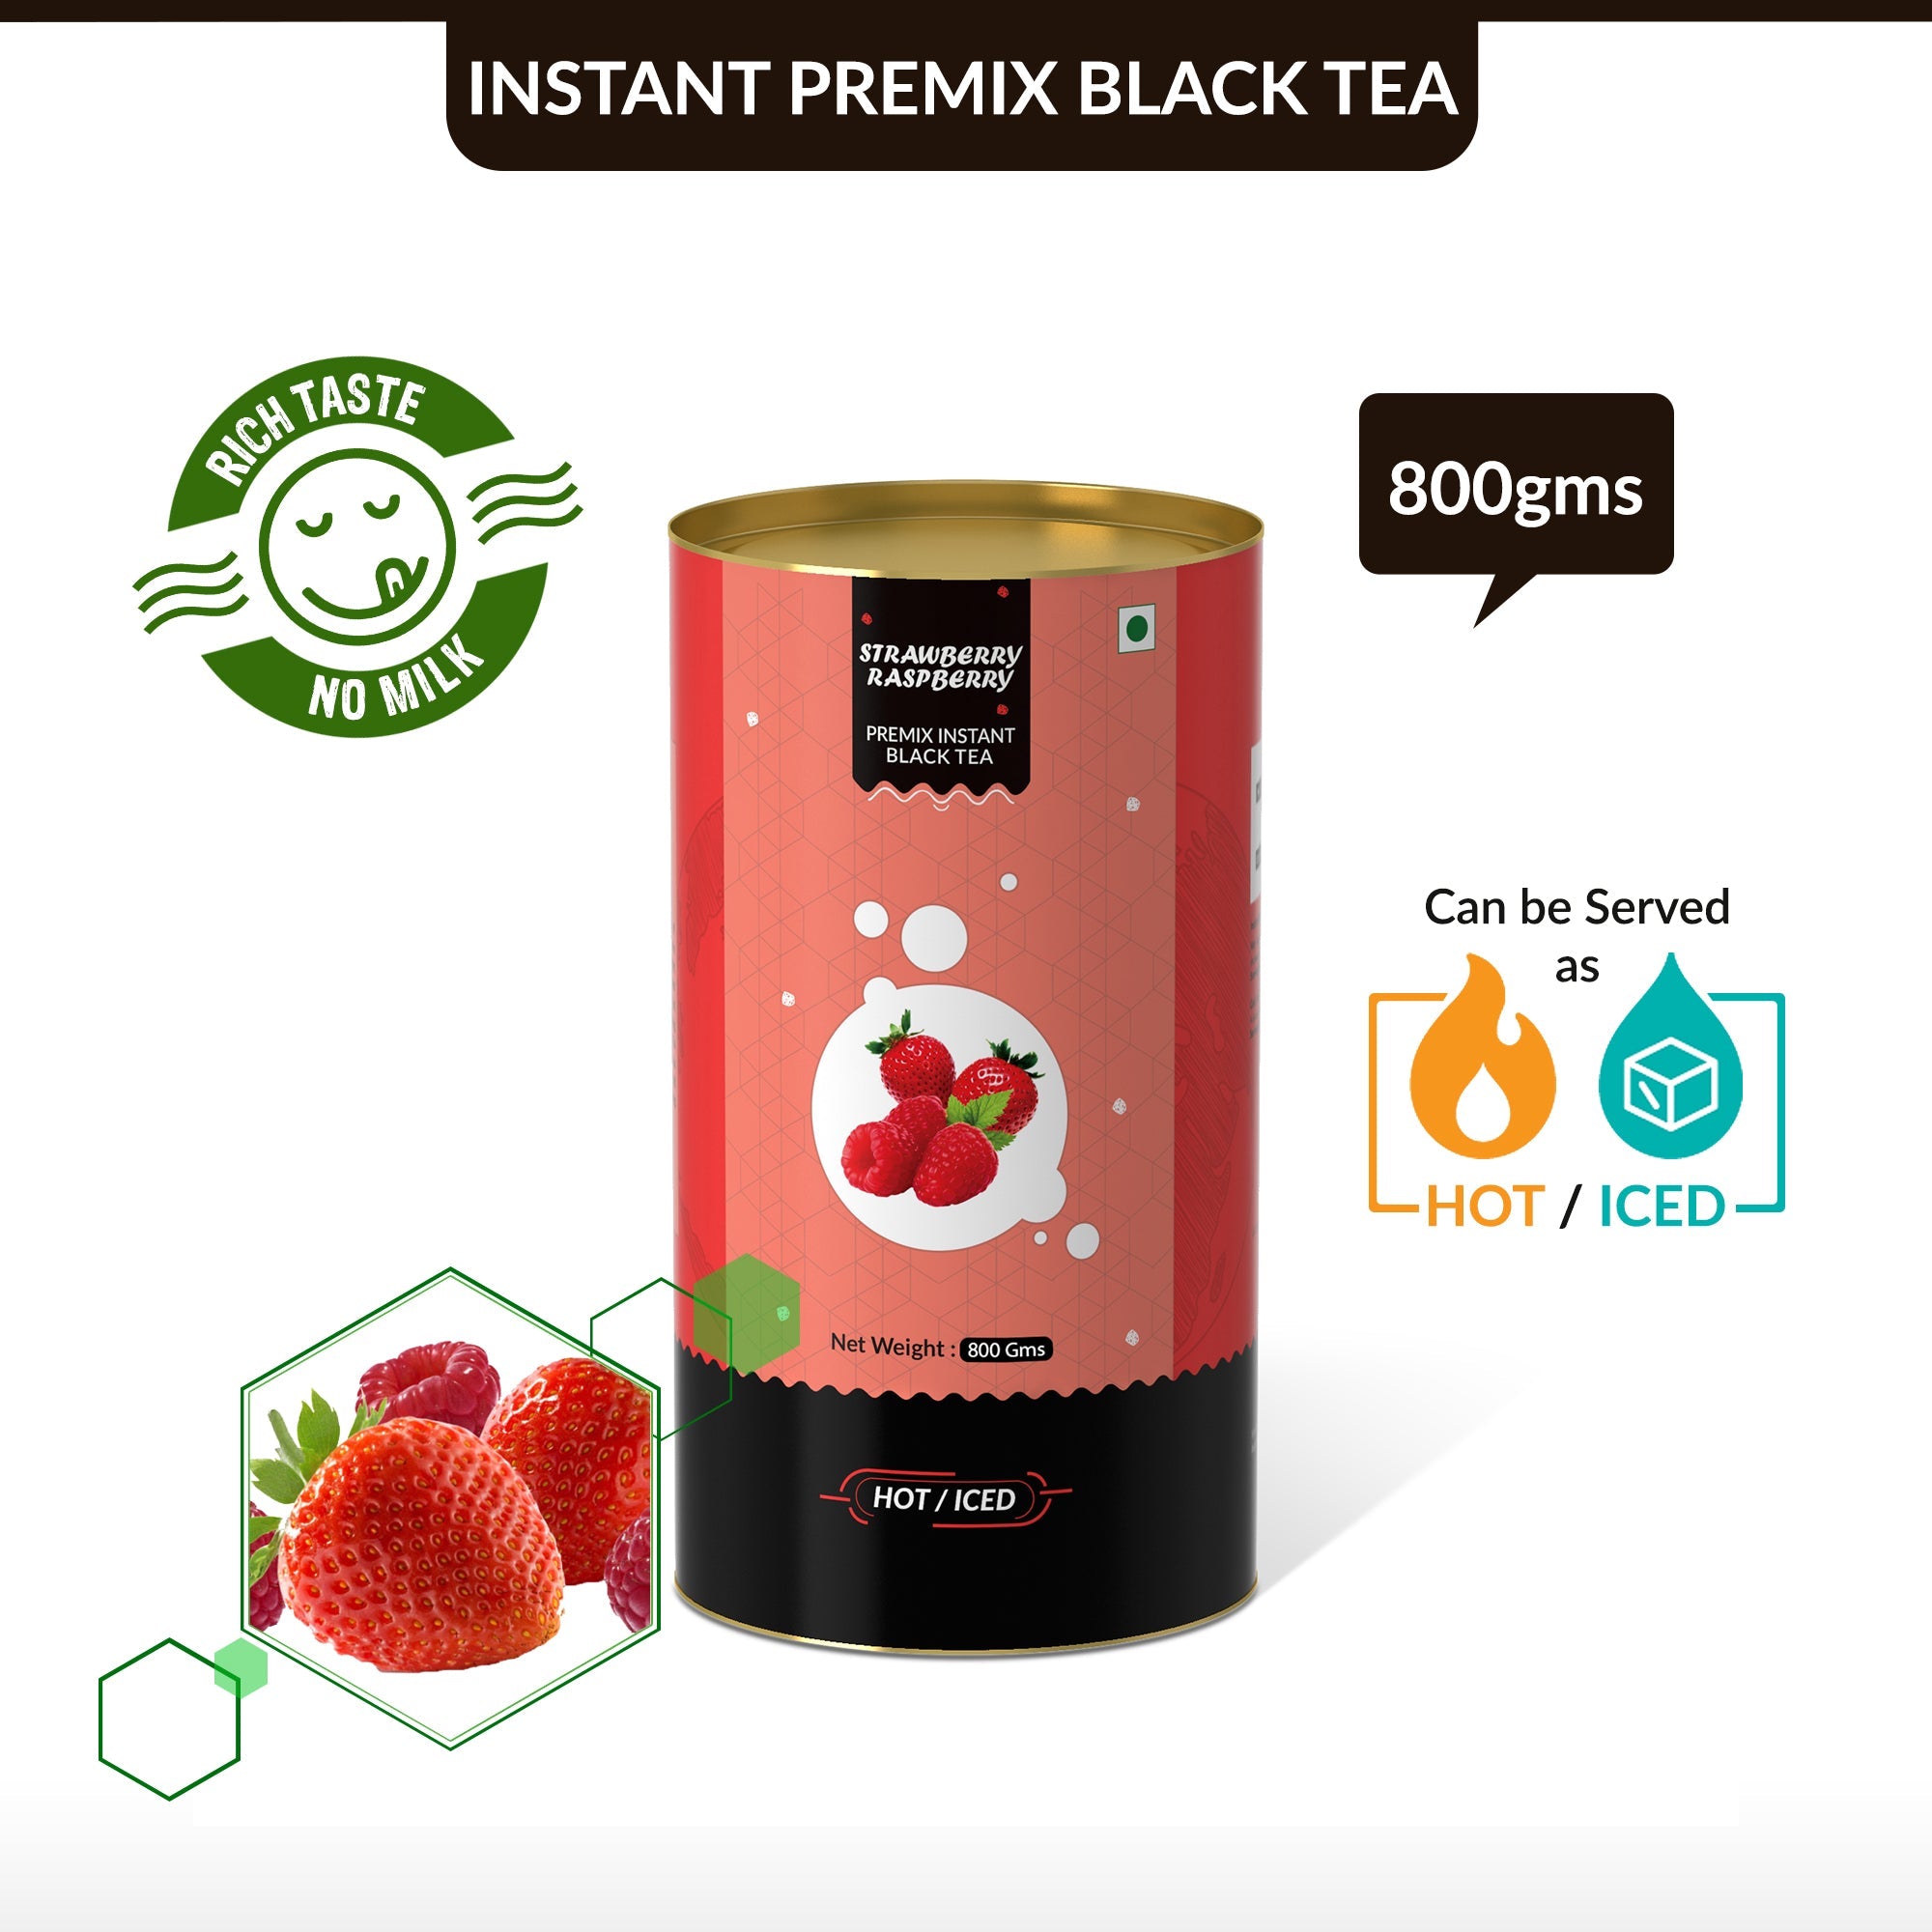 Strawberry & Rasberry Flavored Instant Black Tea - 250 gms